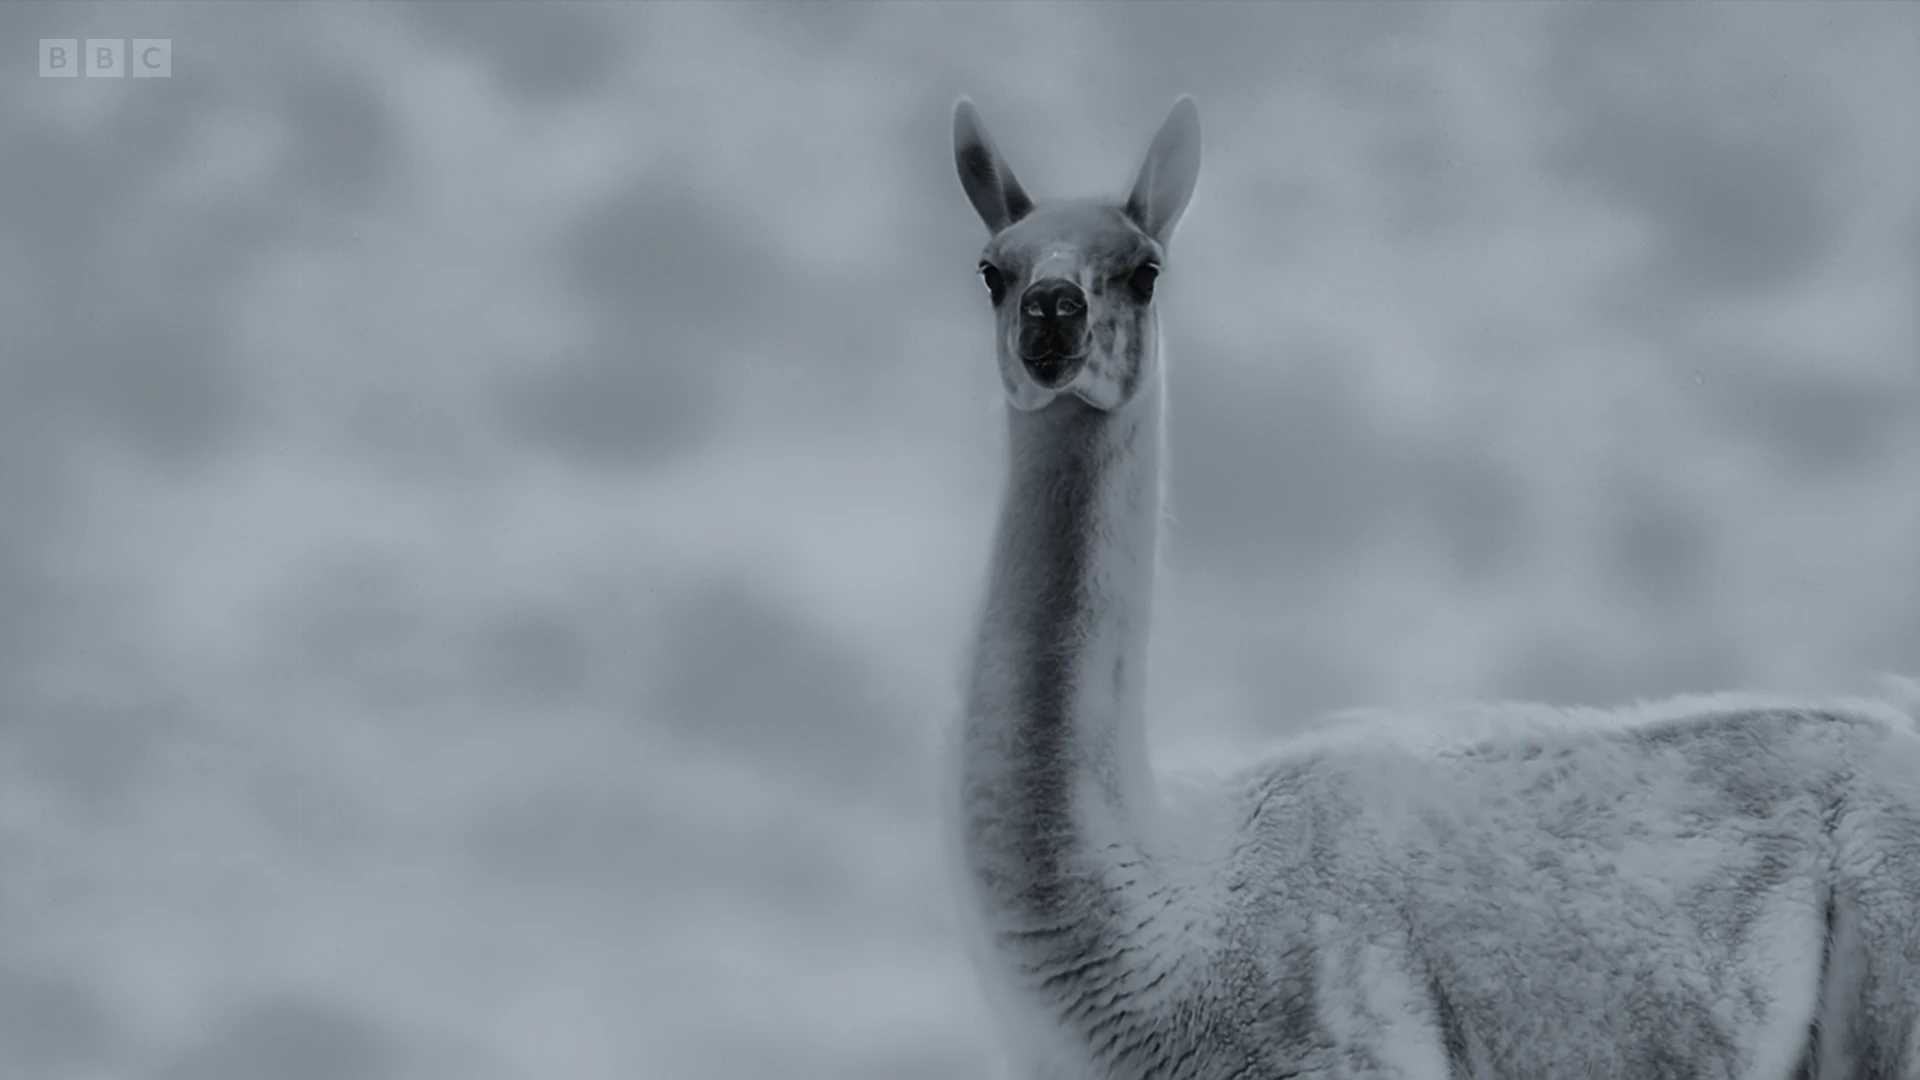 Guanaco (Lama guanicoe guanicoe) as shown in Frozen Planet II - Frozen Peaks